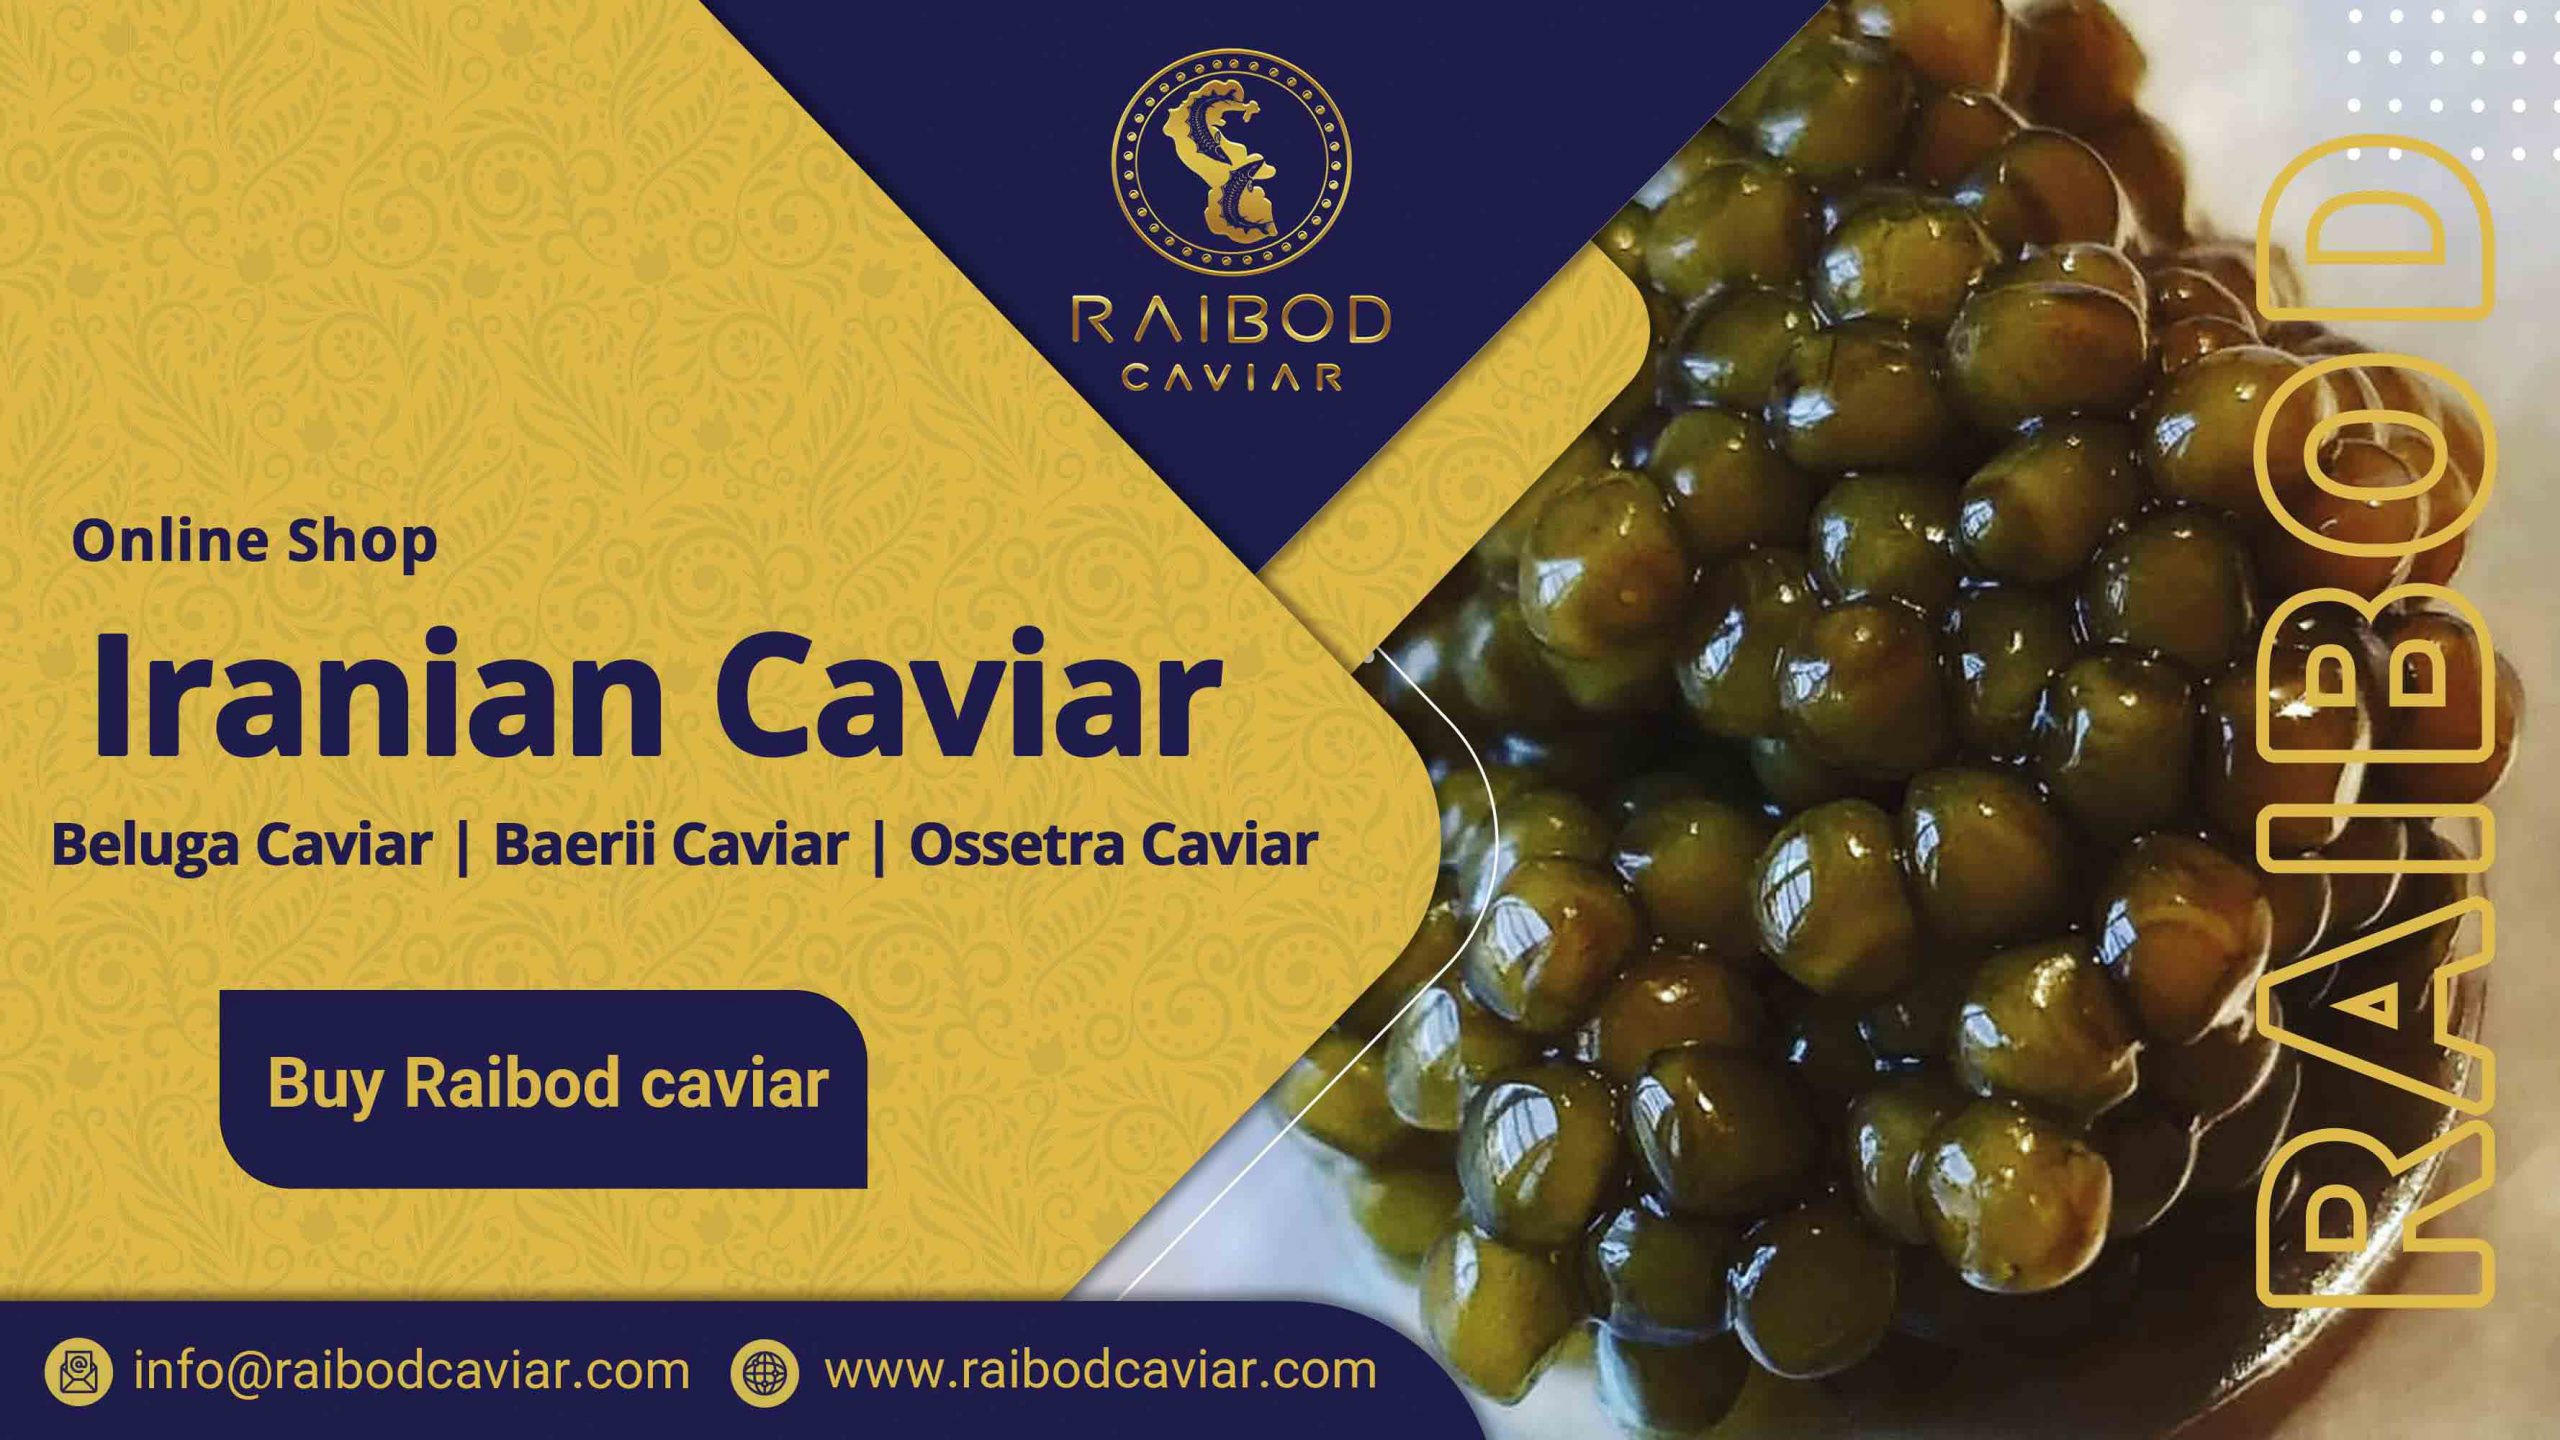 Iranian caviar shopping